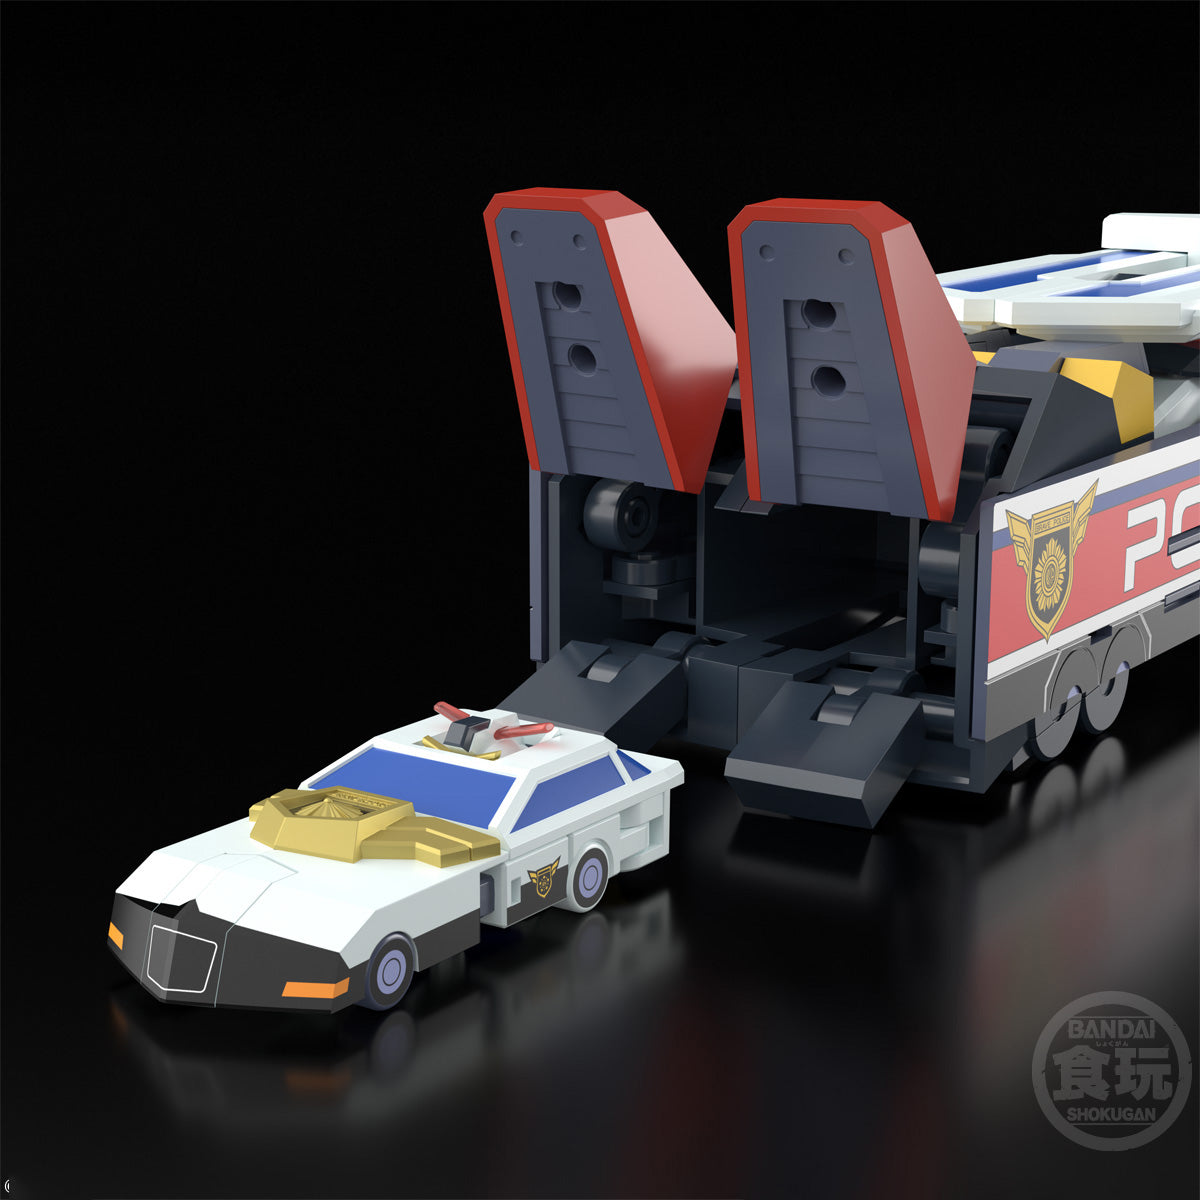 Bandai - Shokugan - SMP - The Brave Police J-Decker - J-Decker Model Kit - Marvelous Toys